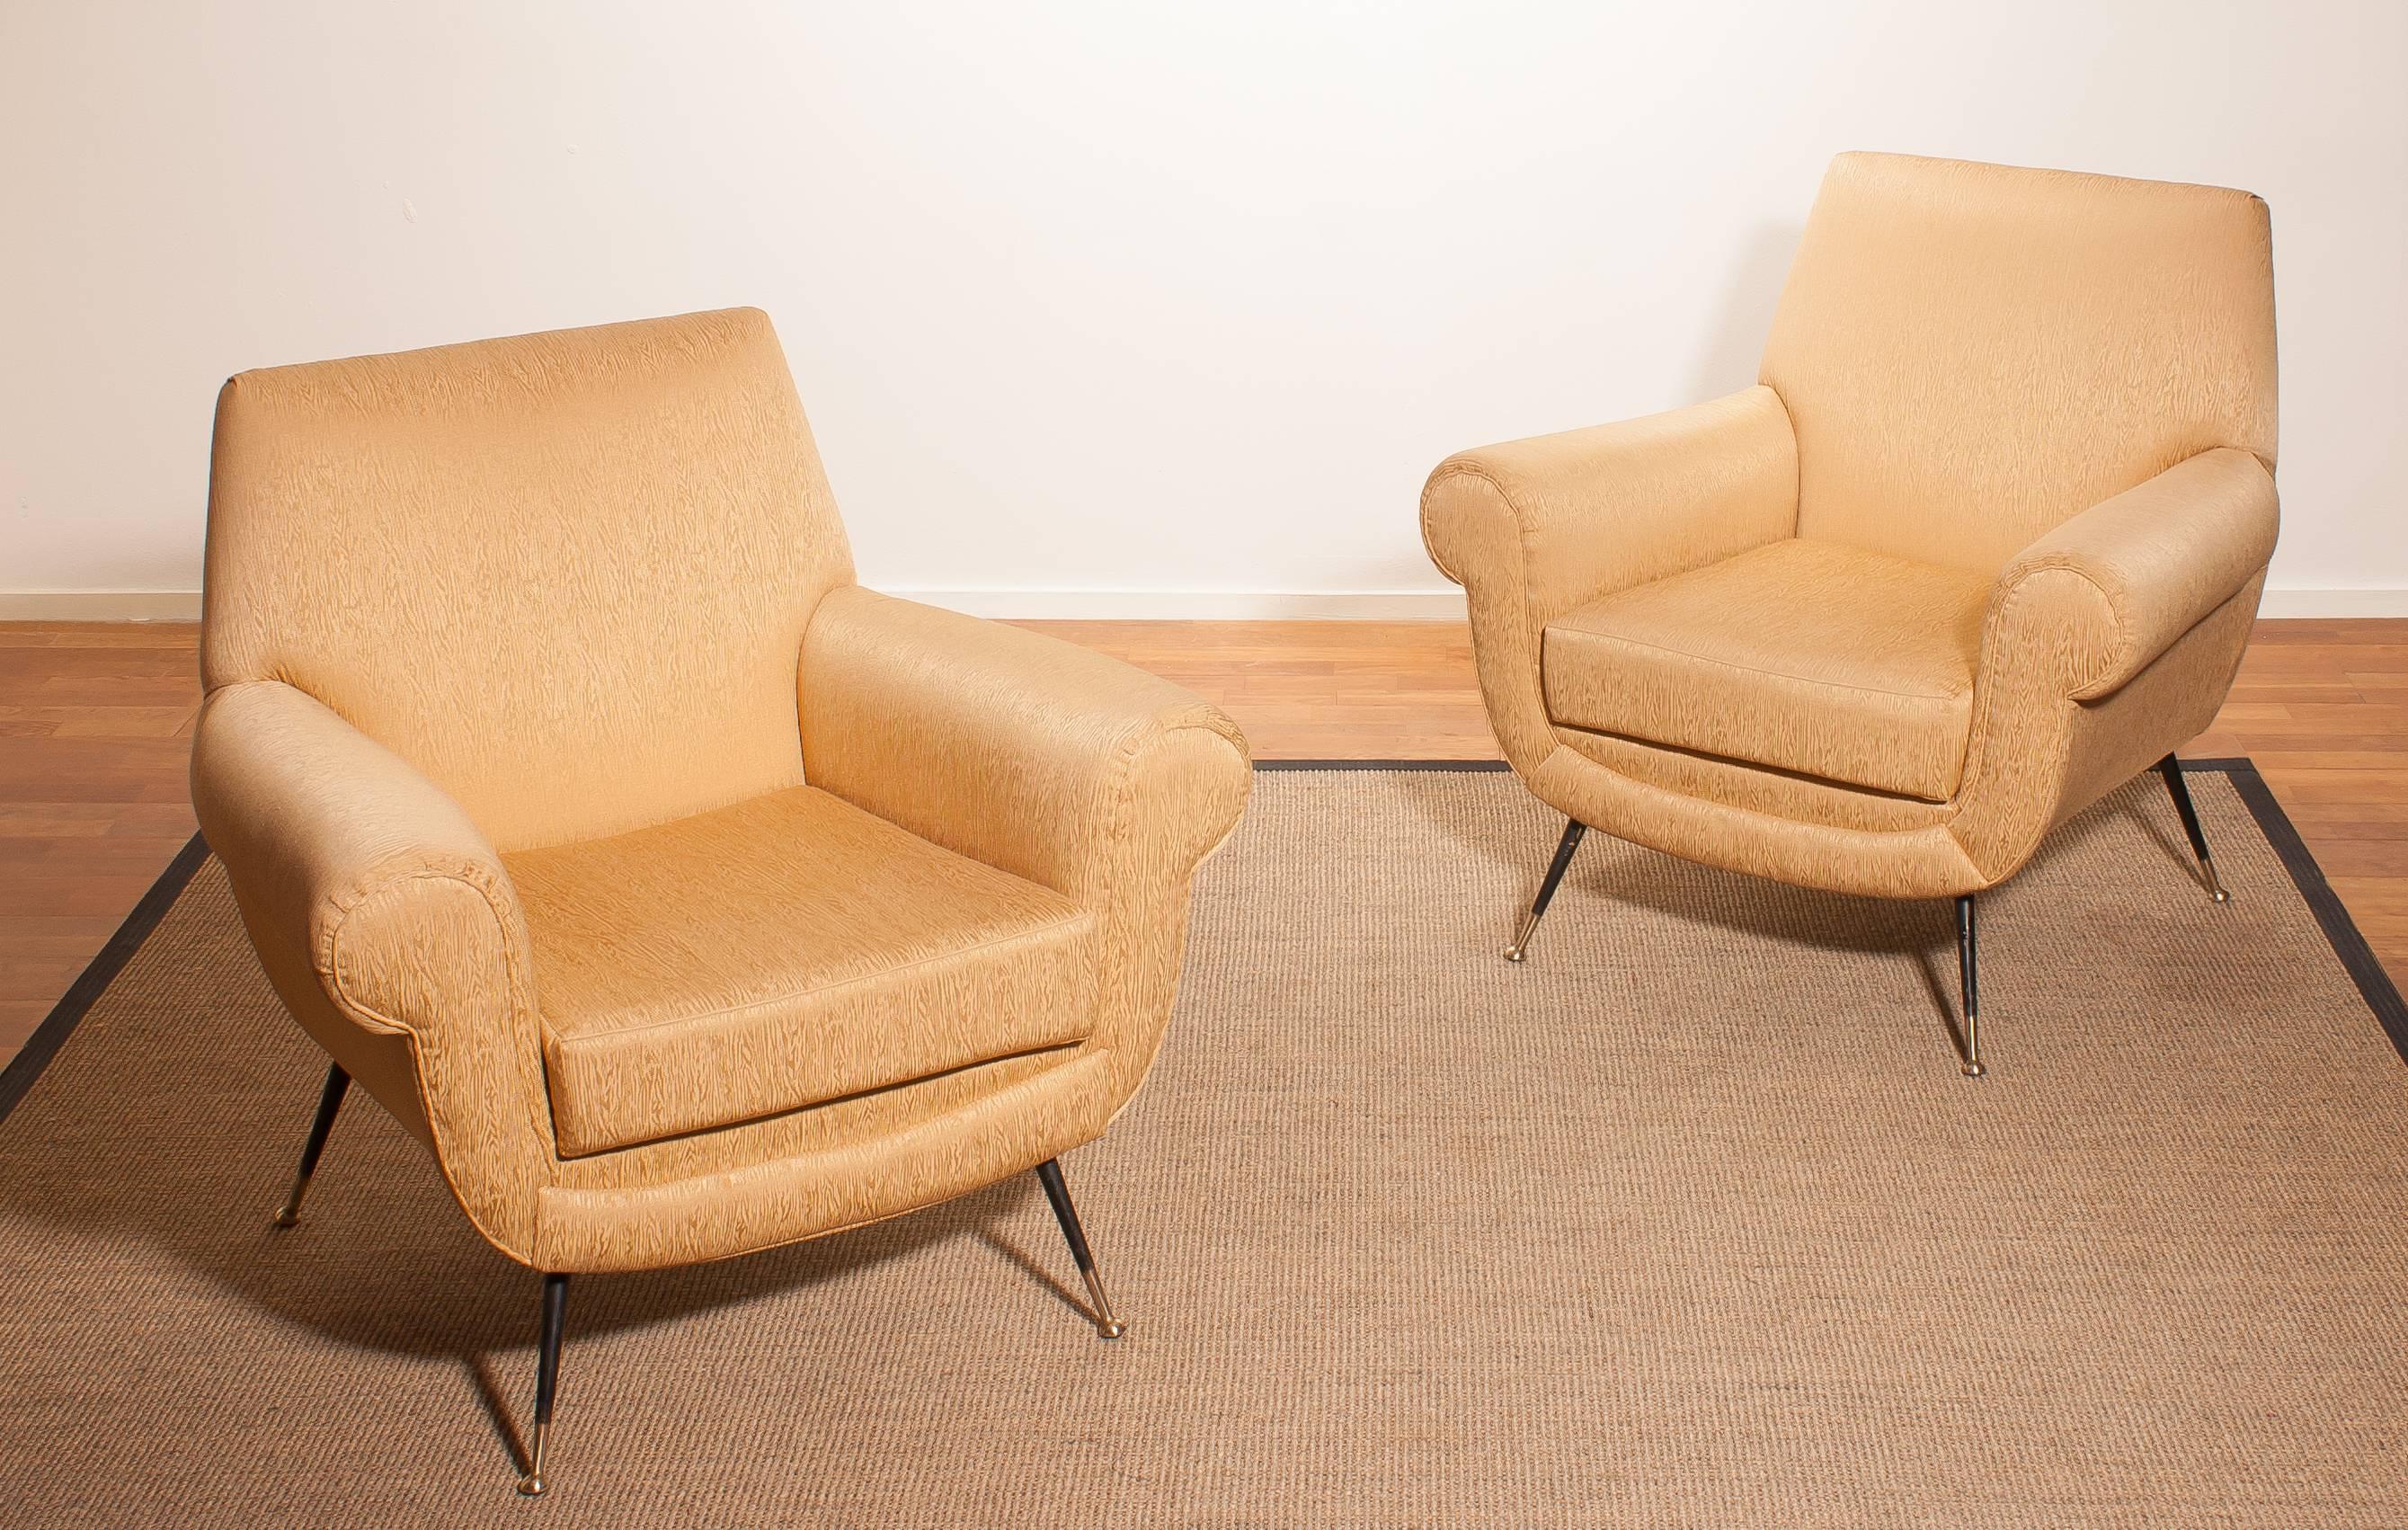 Mid-Century Modern Golden Jacquard Upholstered Easy Chairs by Gigi Radice for Minotti, Brass Legs.